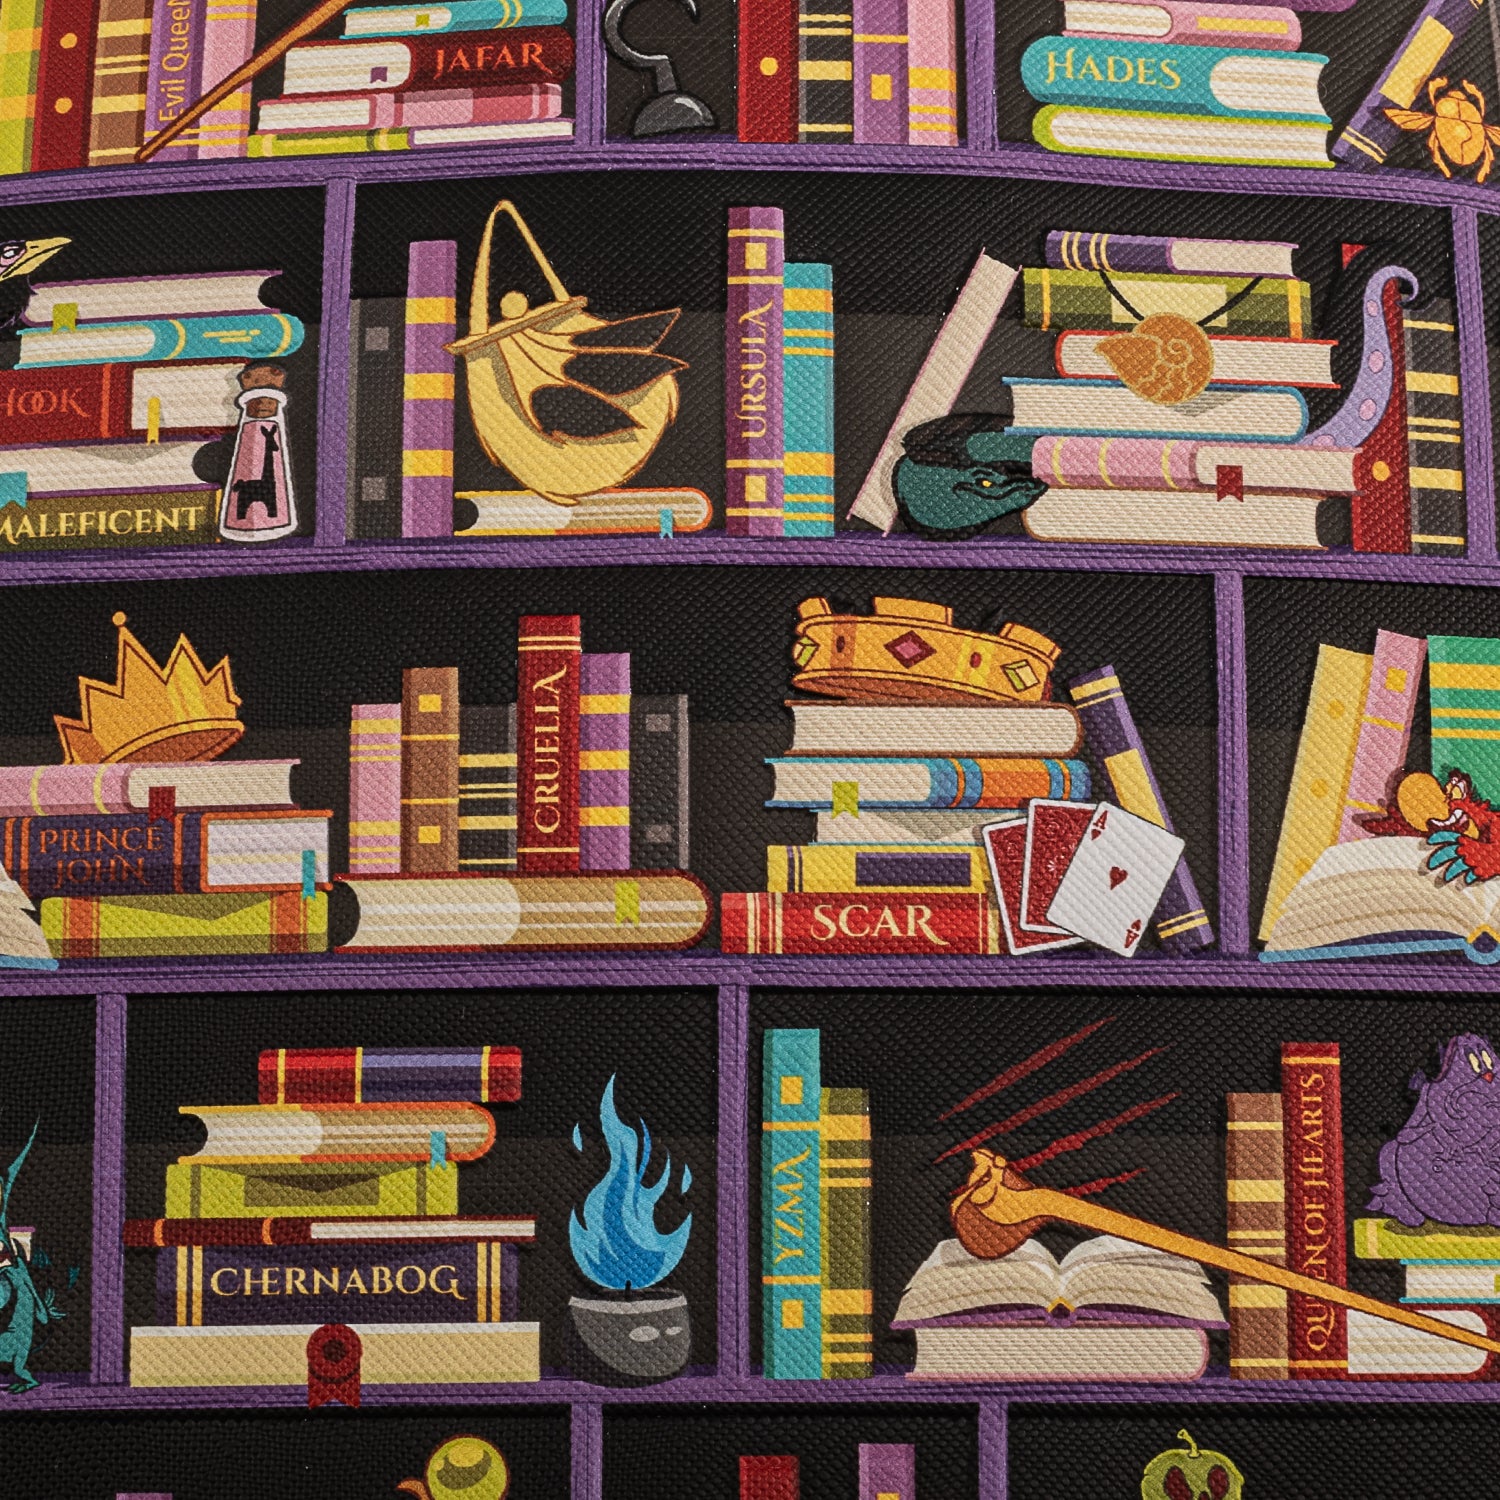 Disney Villain Books Mini Backpack